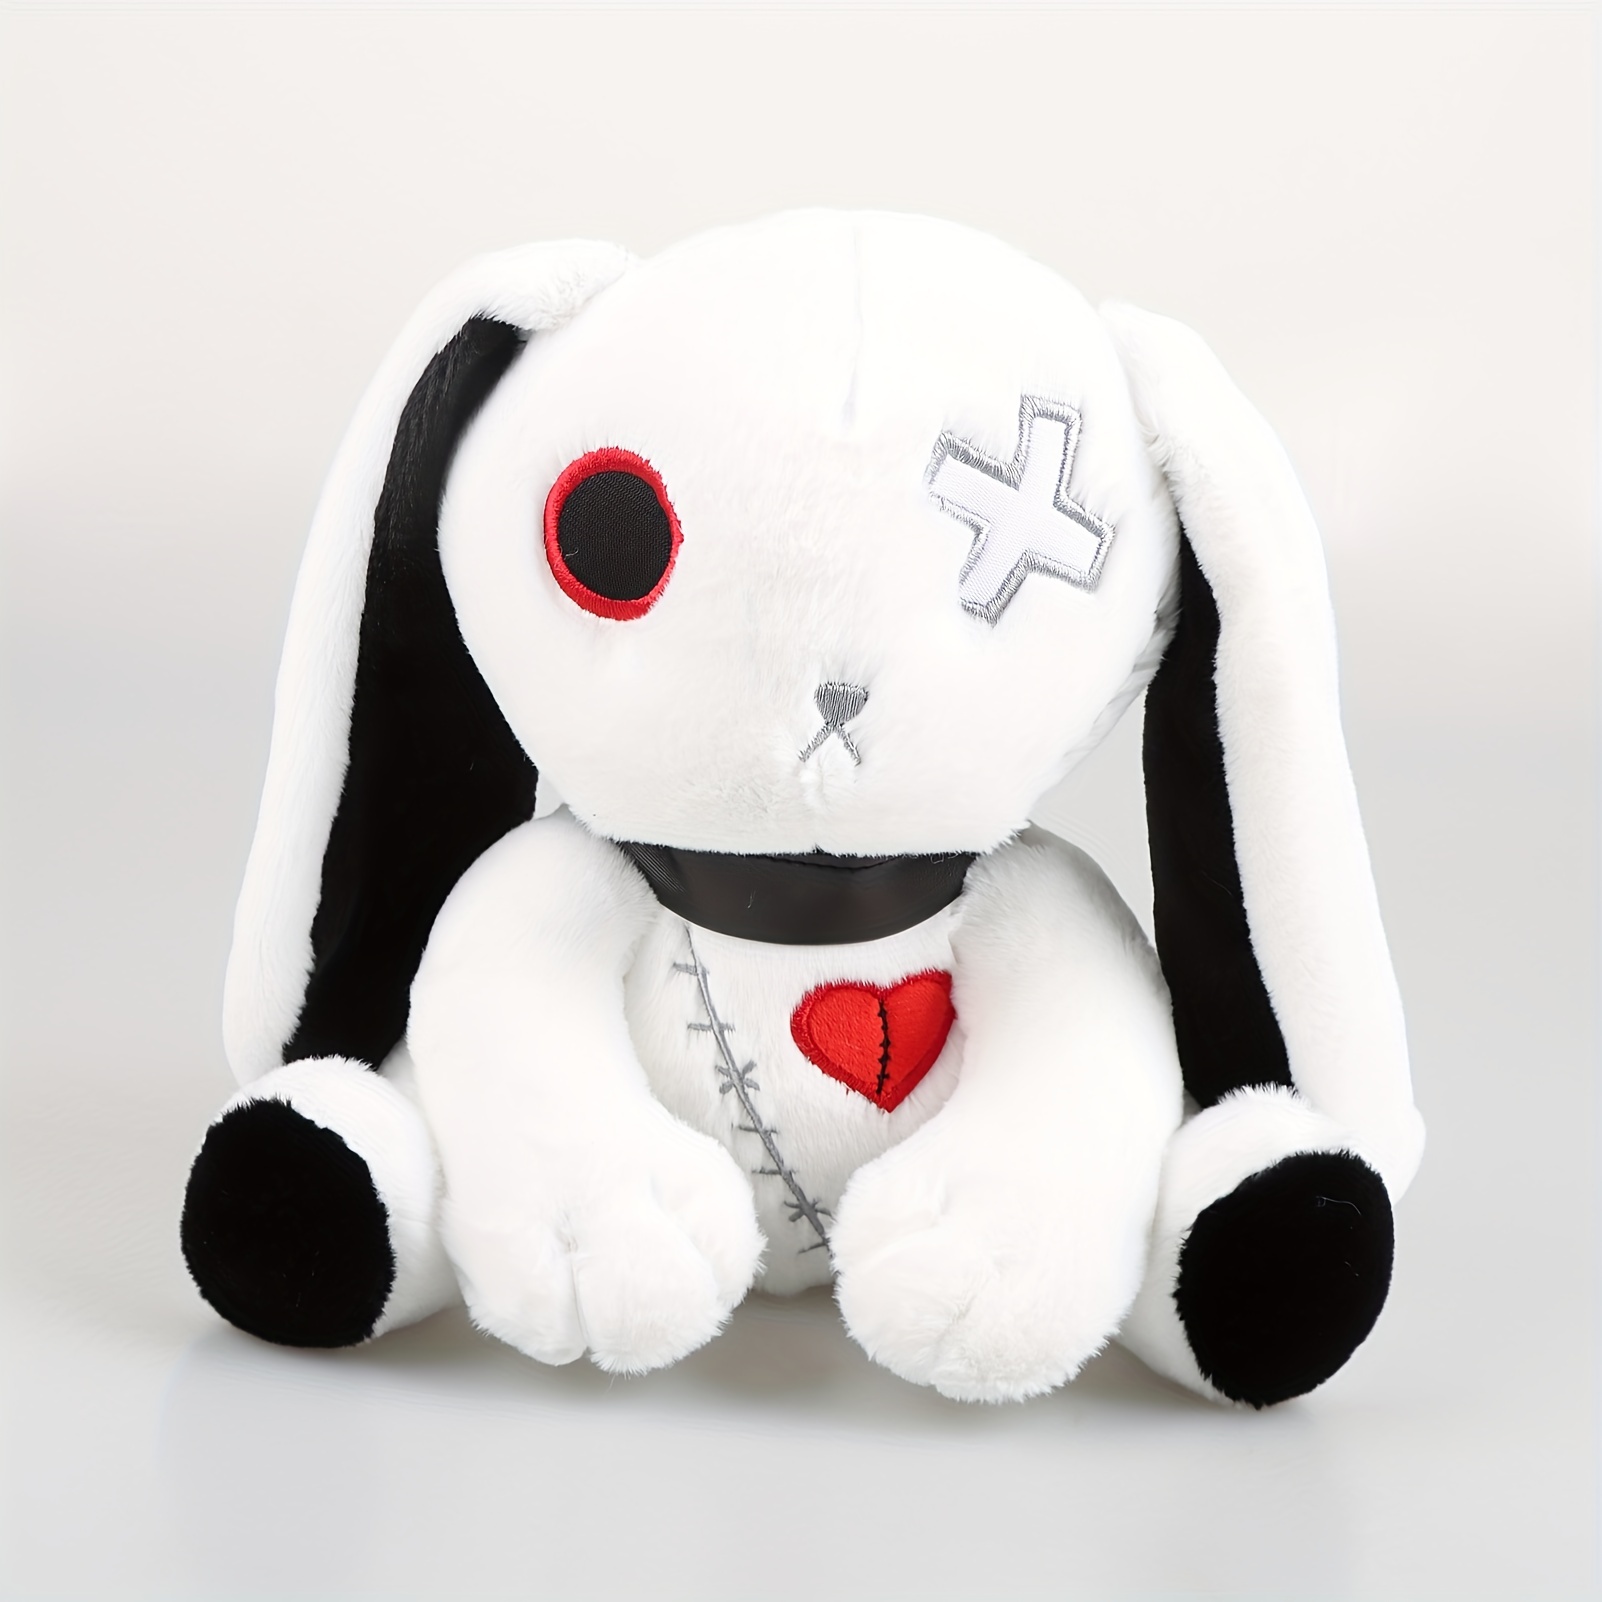 25cm/9.84in Creepy Gothic Bunny Plush, Spooky Bunny Stuffed Animal Cute  Horror Dreadful Bunny Doll for Halloween Decor